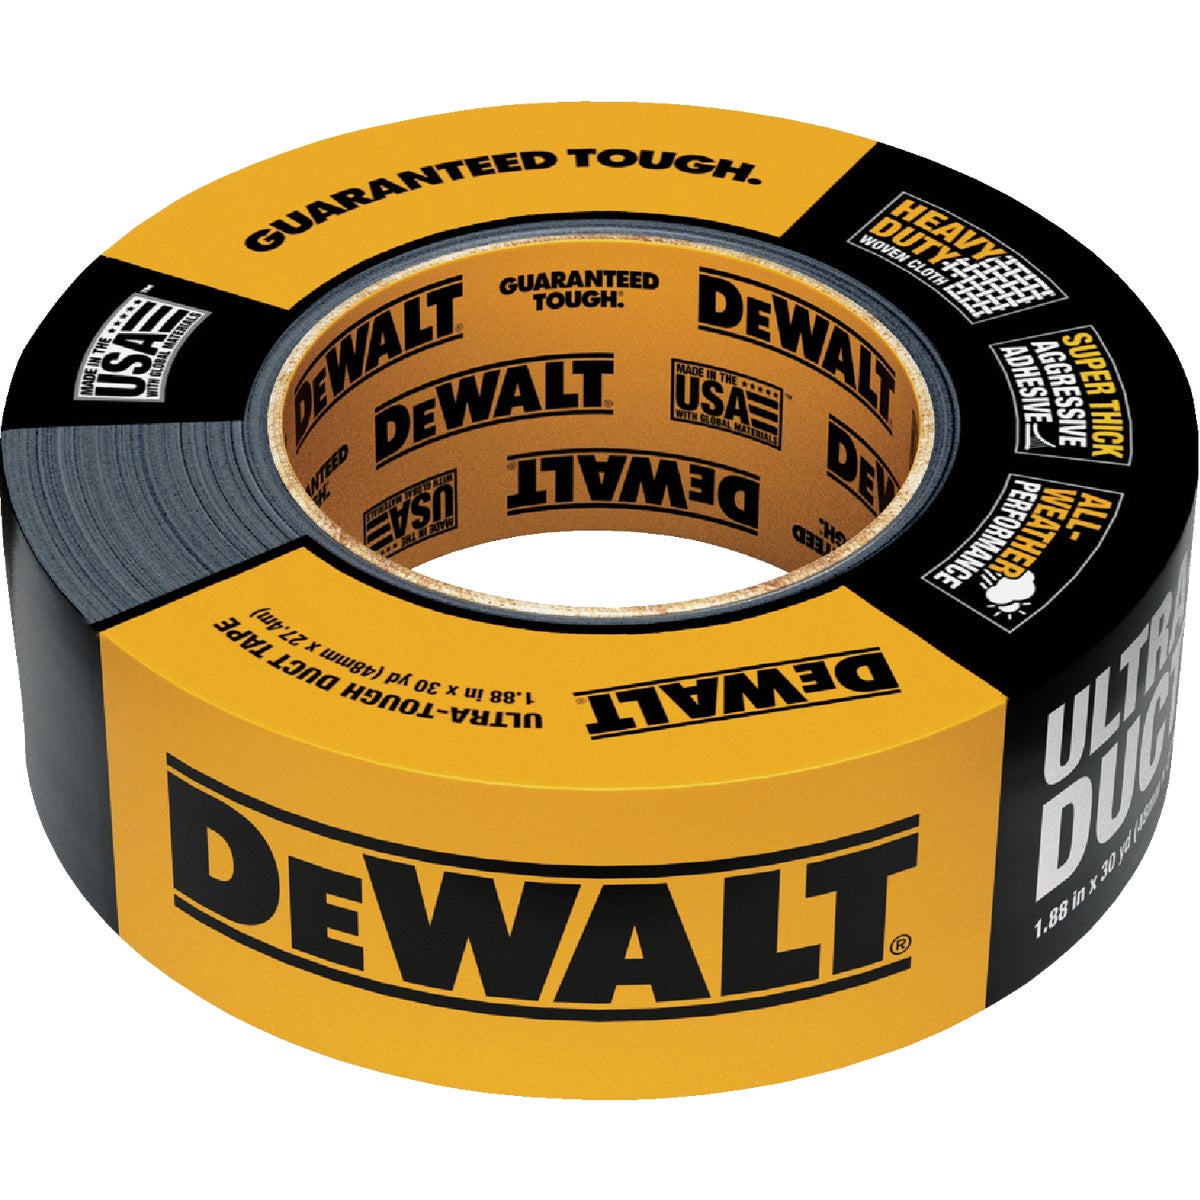 DEWALT Ultra-Tough 1.88 In. x 30 Yd. Duct Tape, Black